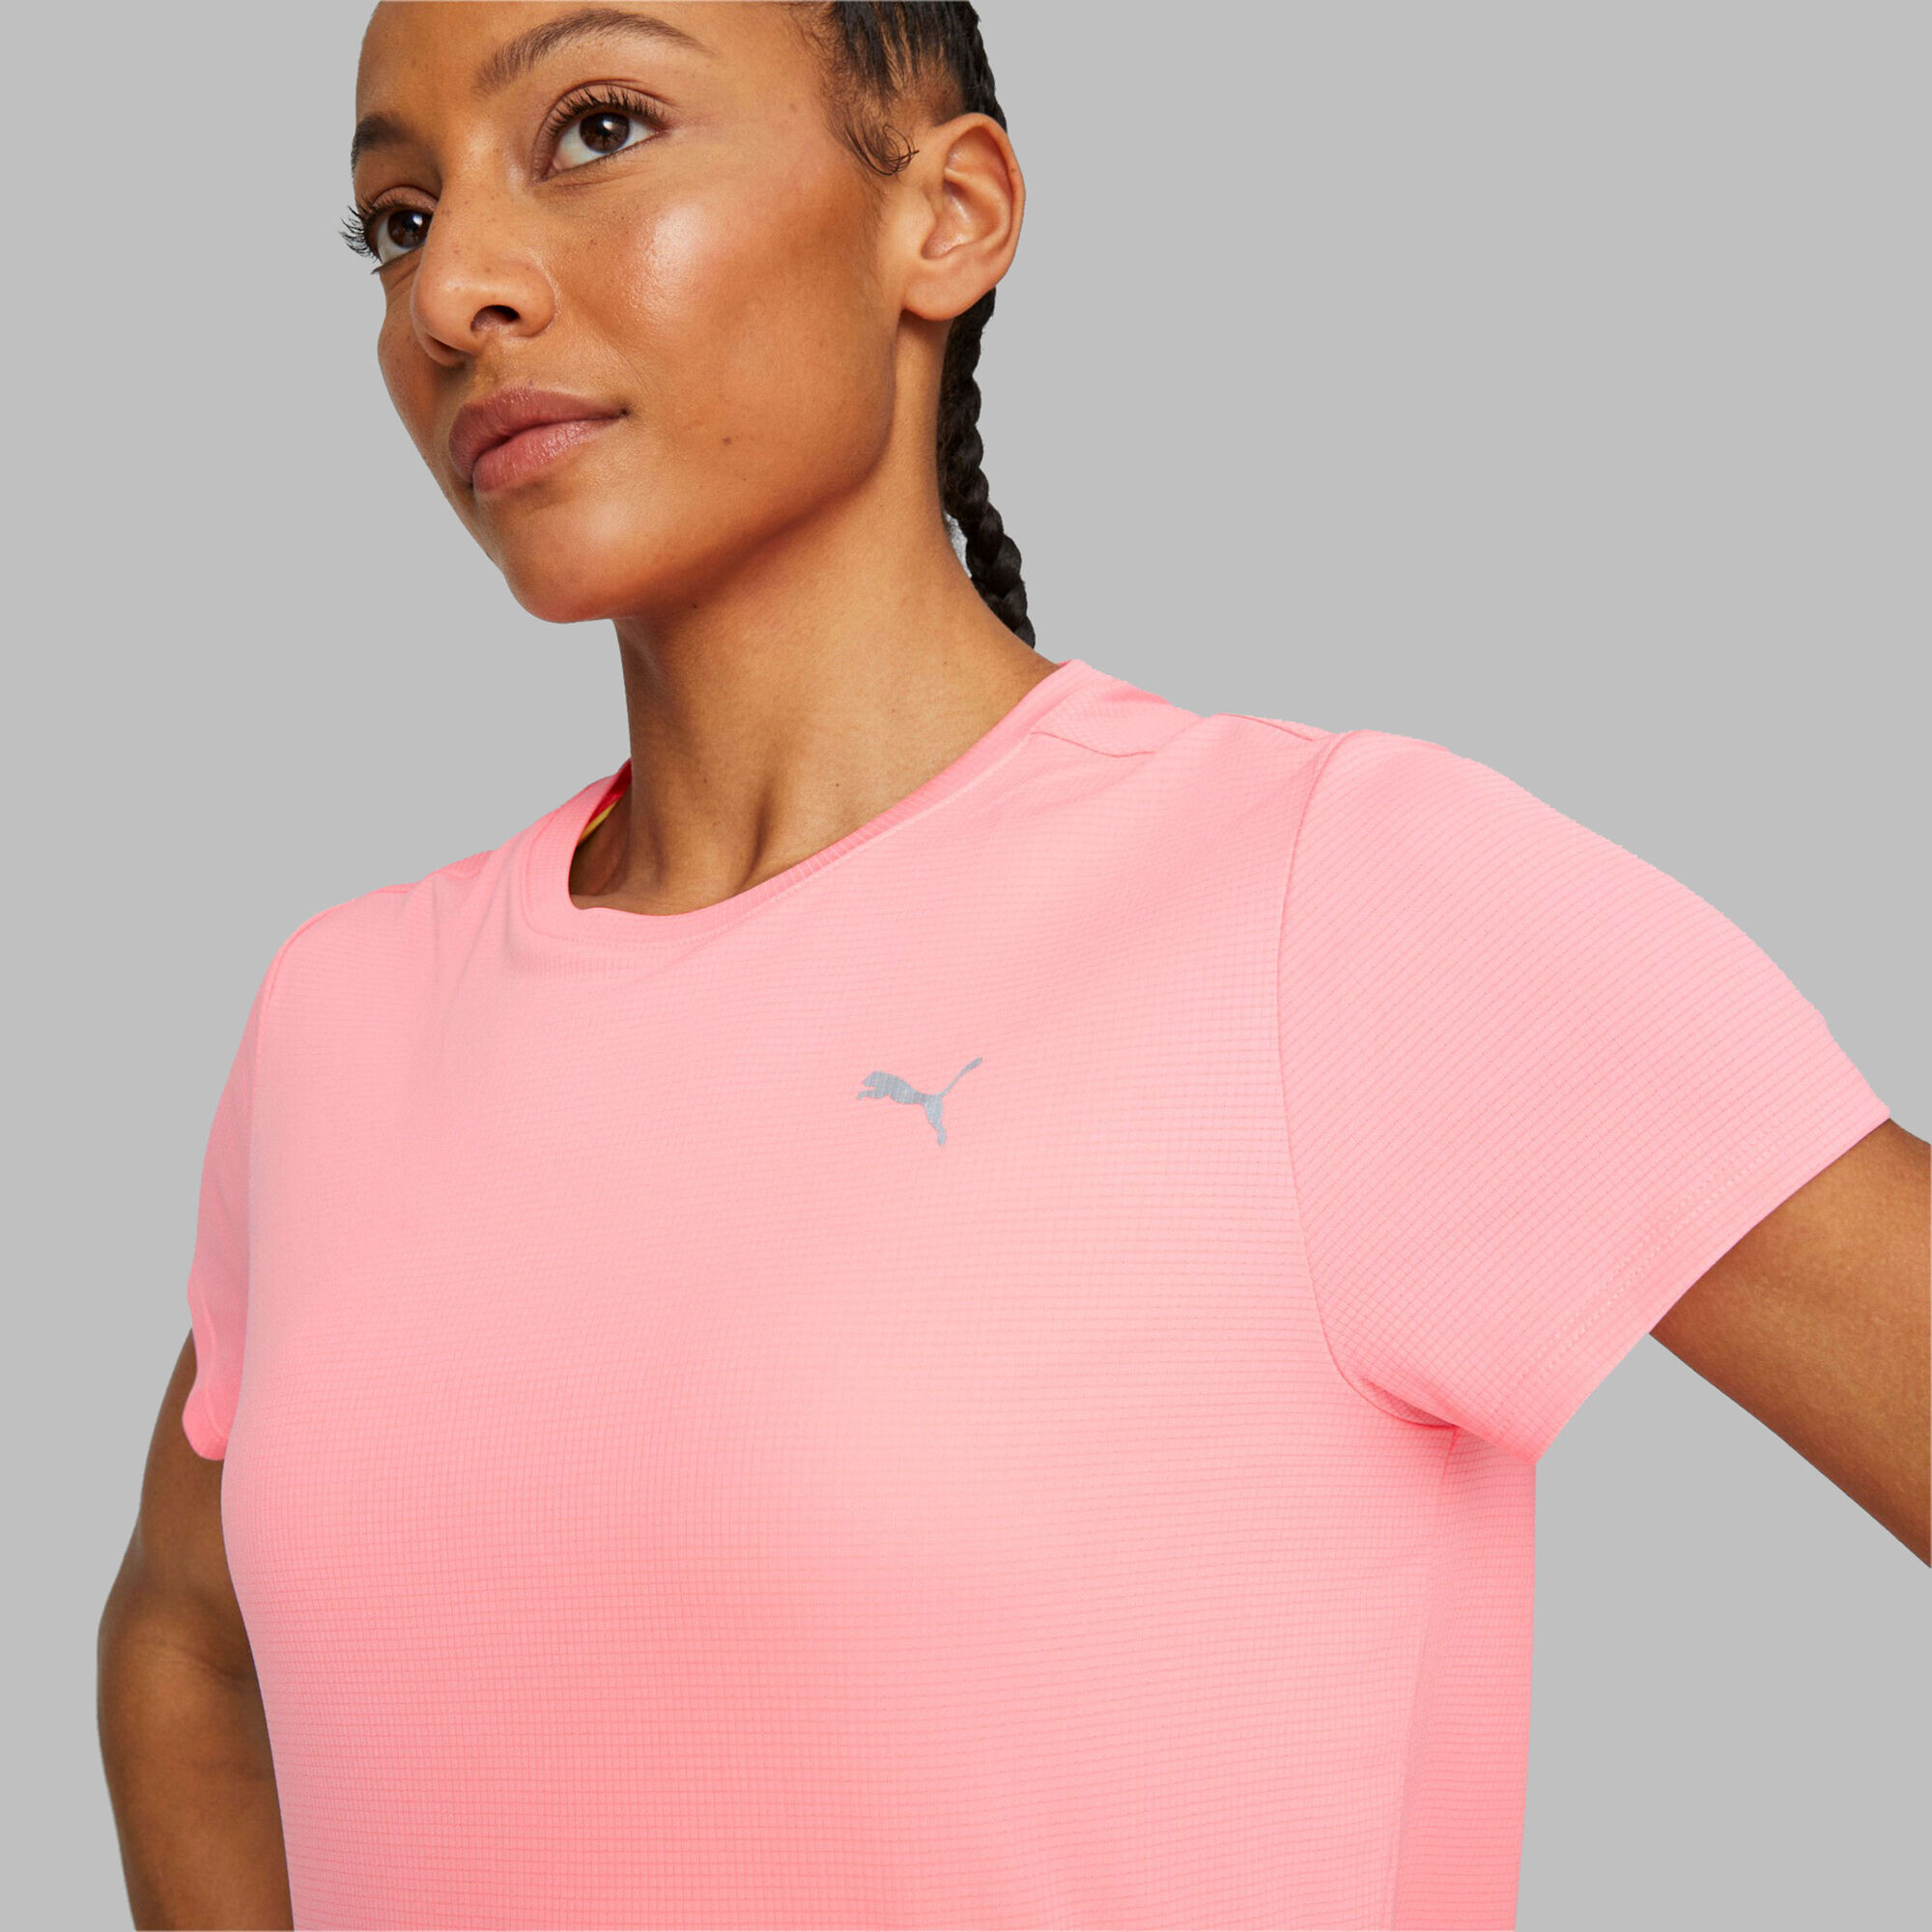 Buy Puma Run Favorite Women COM Point | online Shirts Pink Running Running